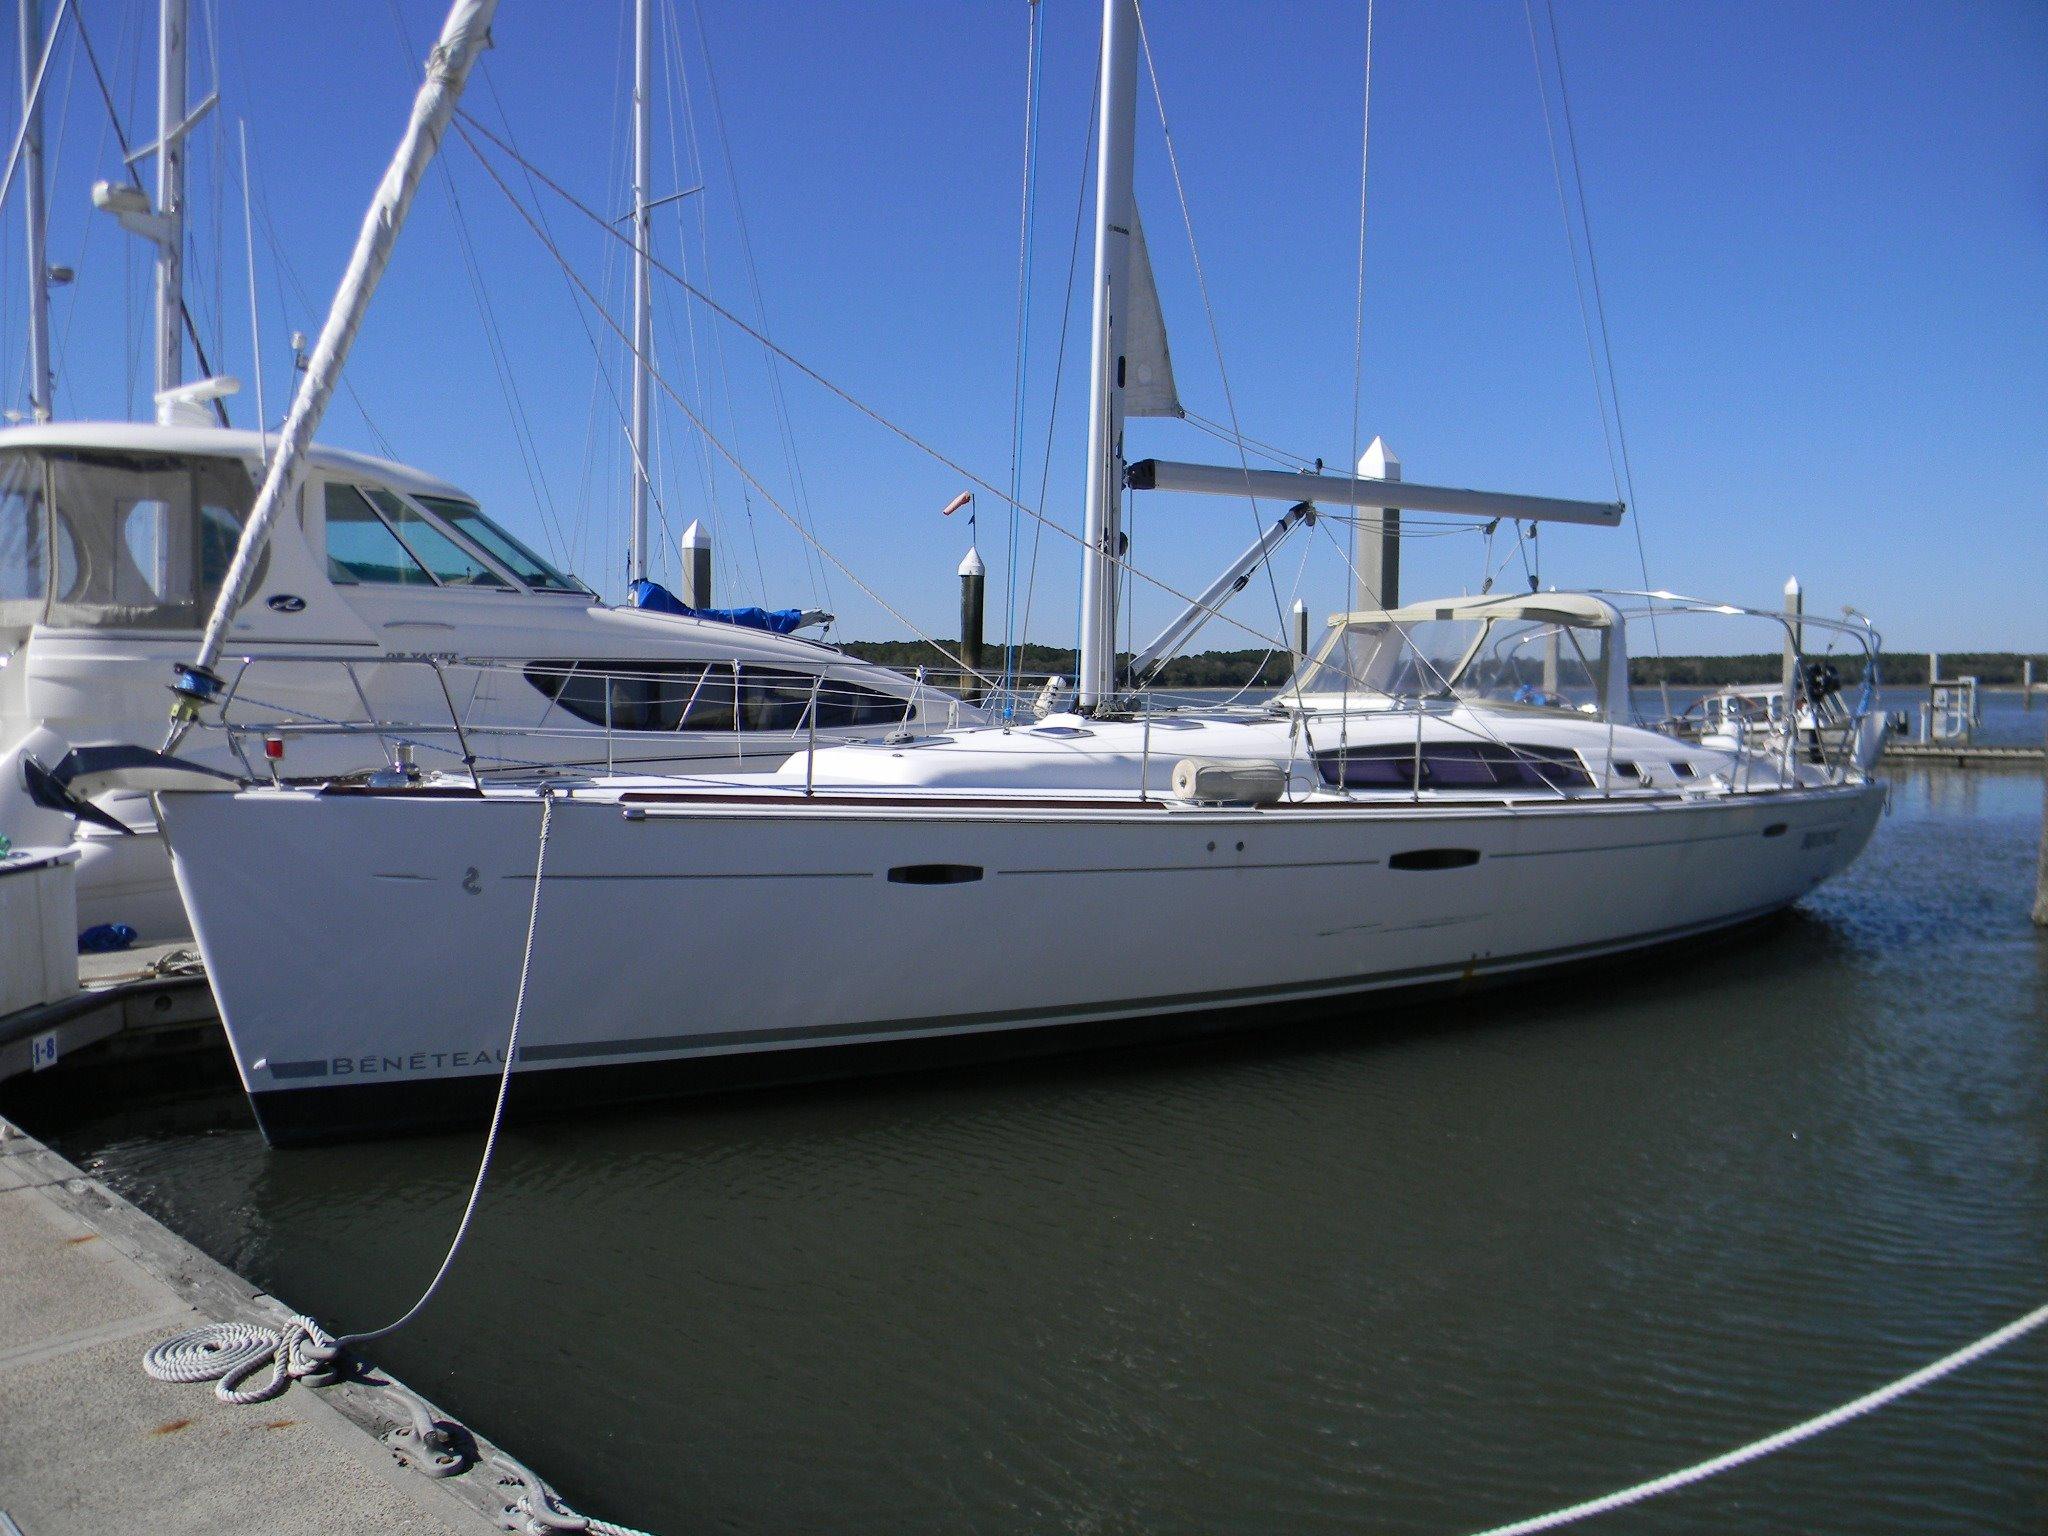 2011, Beneteau Oceanis 50 For Sale, St. Barts Yachts